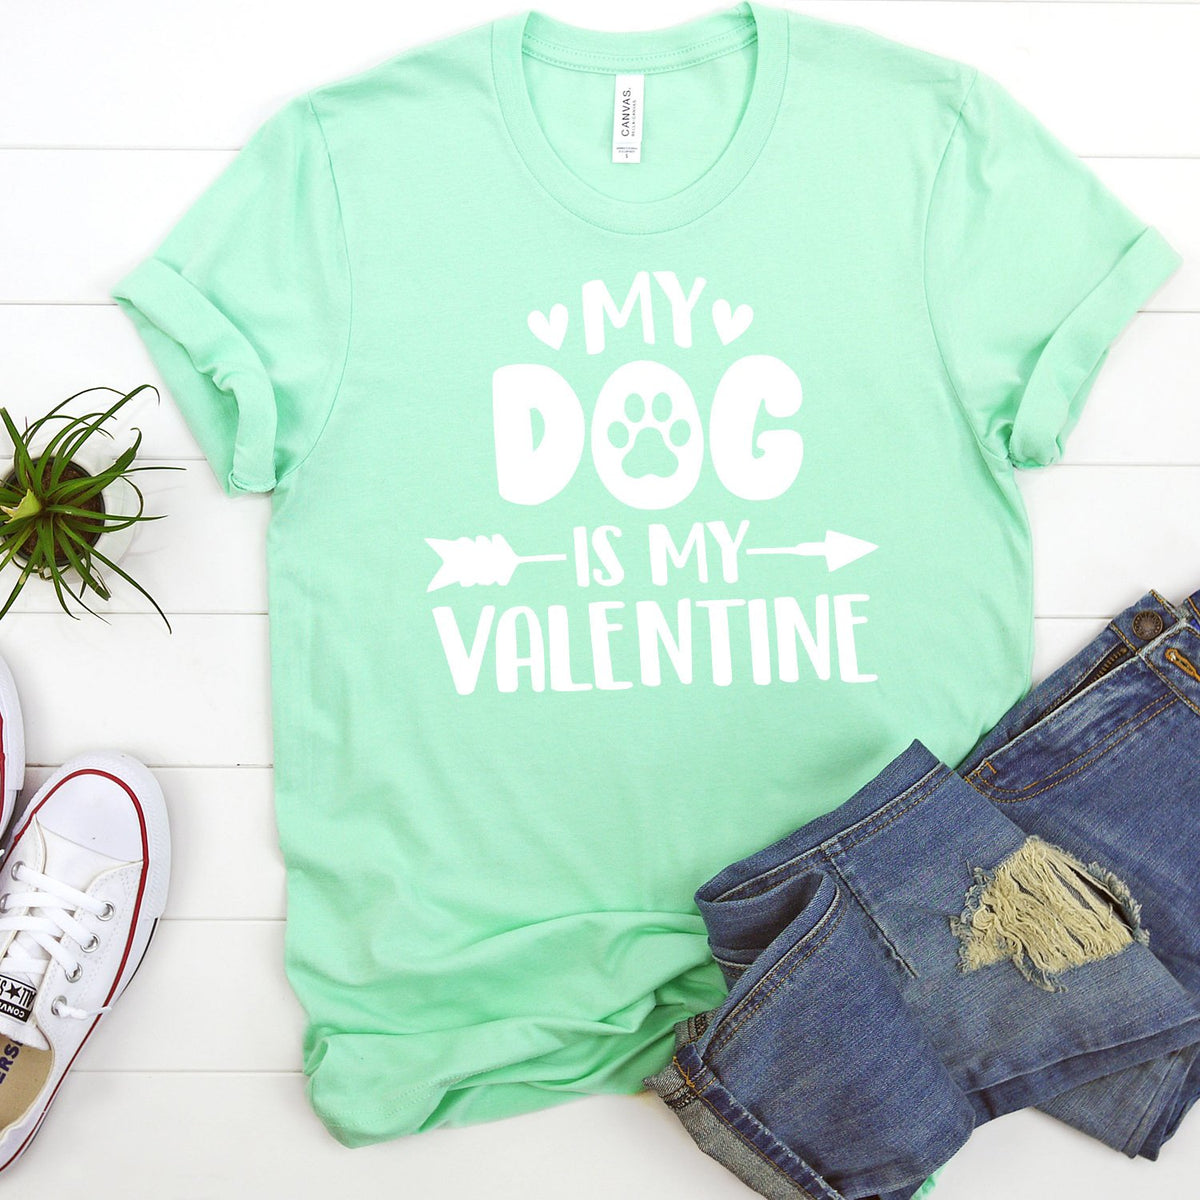 My Dog Is My Valentine - Short Sleeve Tee Shirt